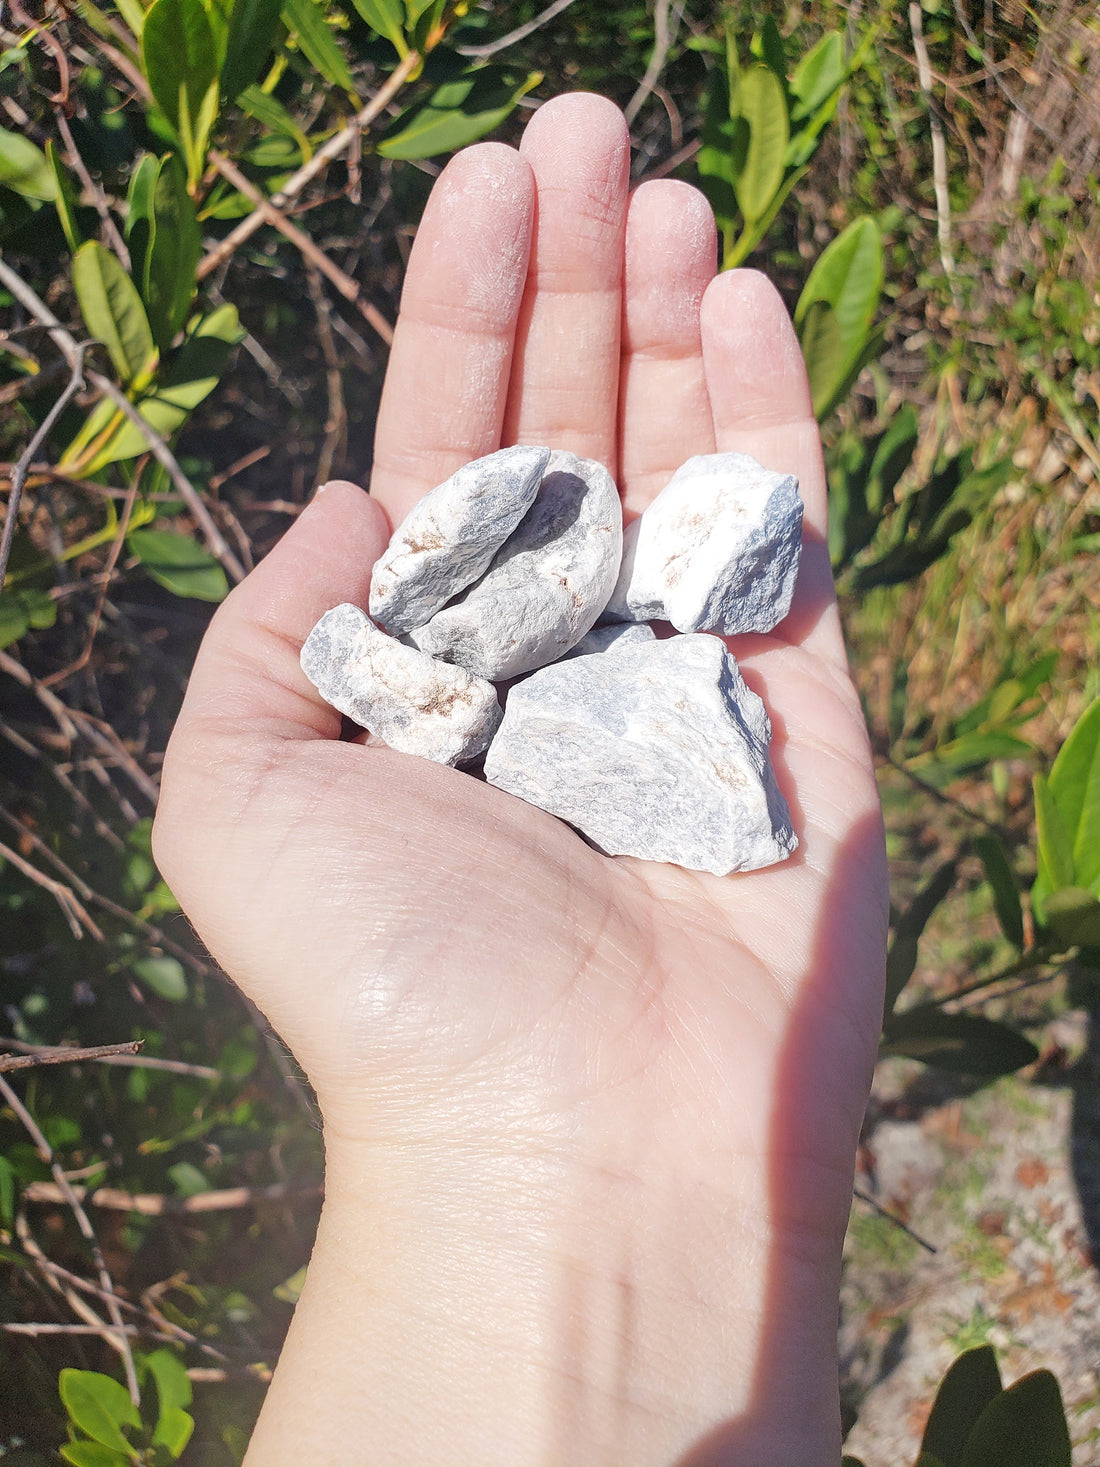 rough angelite stones in hand